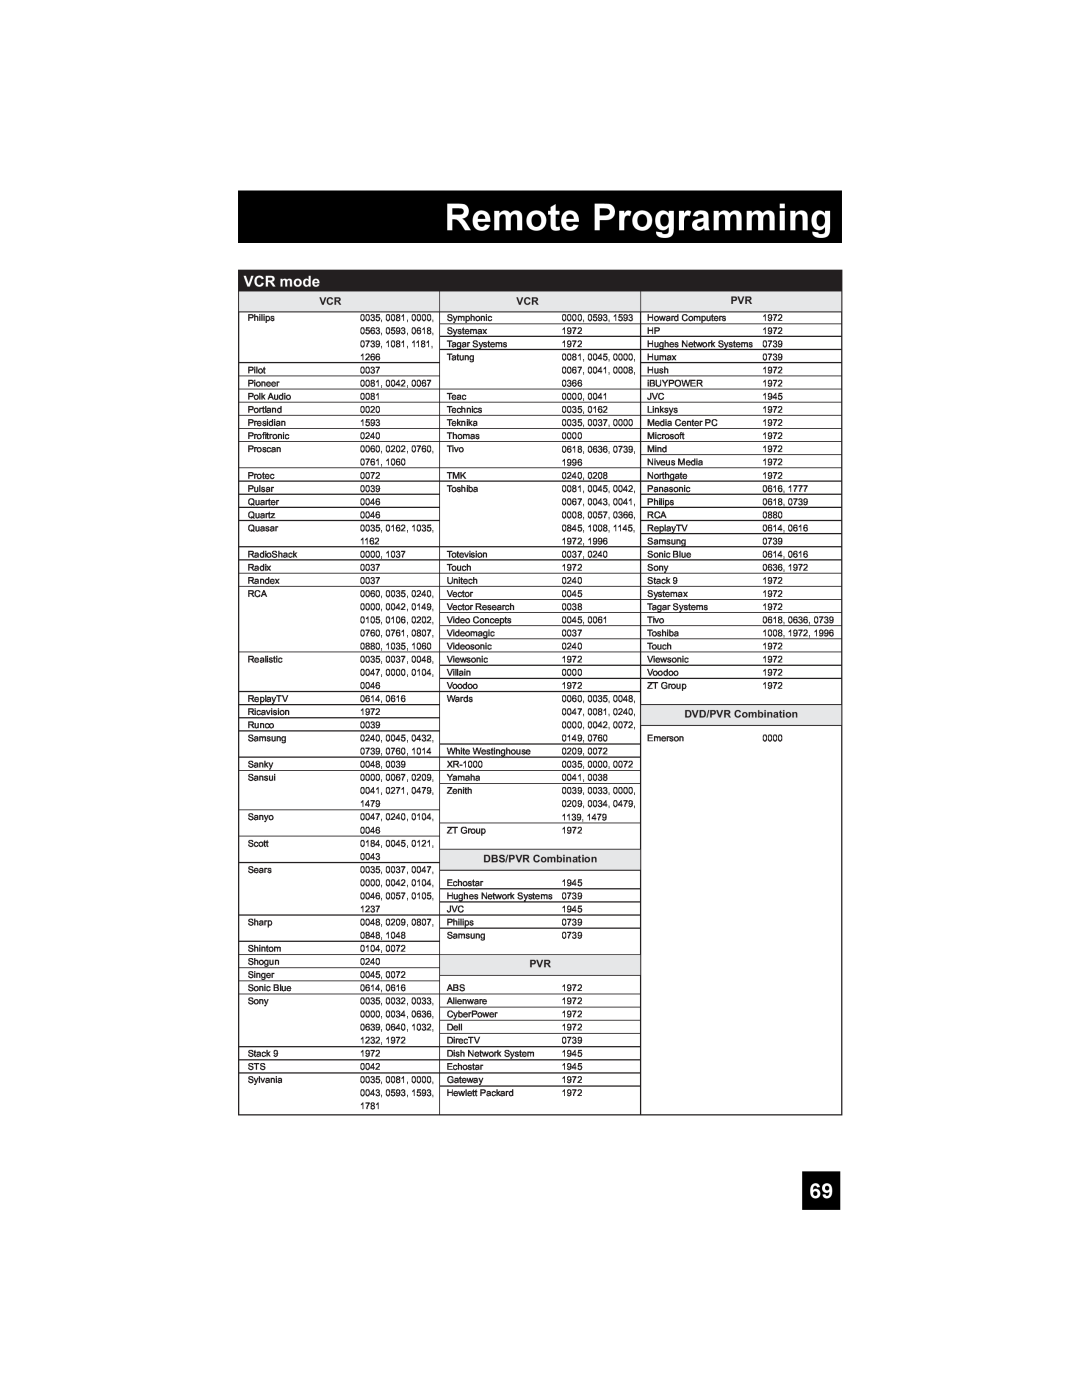 JVC LT-37X688, LT-42X688 manual Remote Programming, VCR mode, DVD/PVR Combination, DBS/PVR Combination 